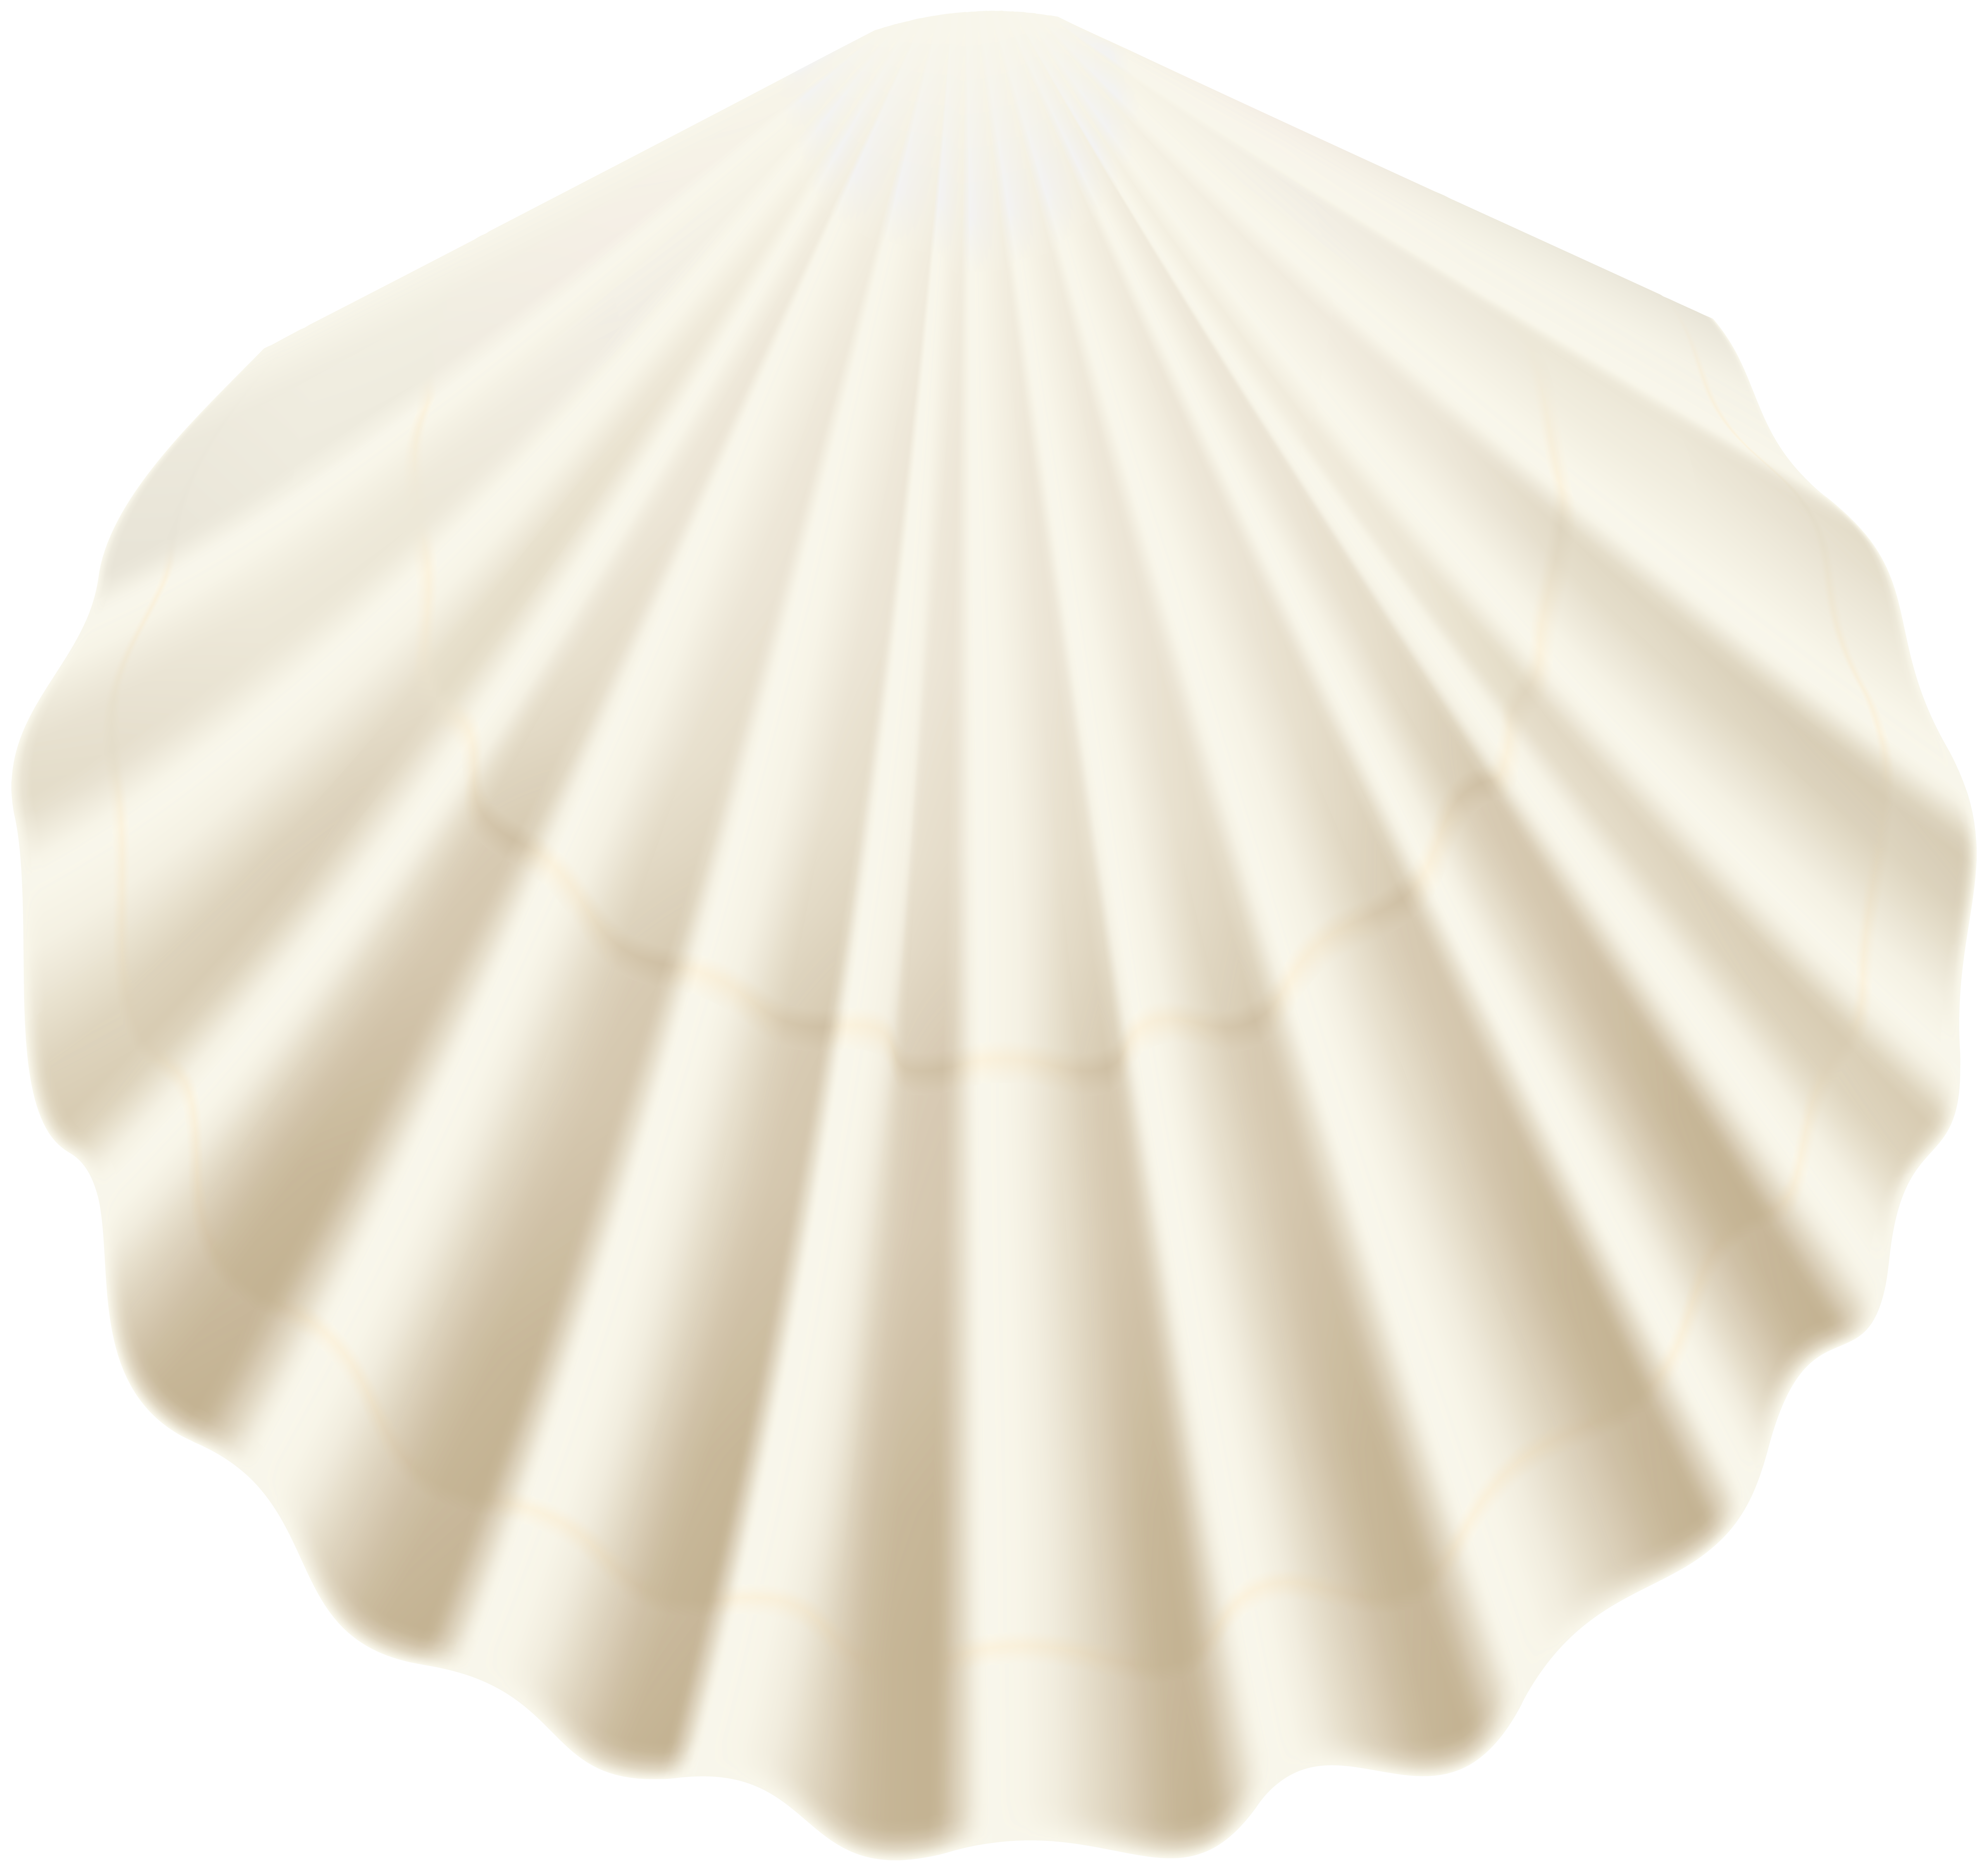 seashells clipart borders